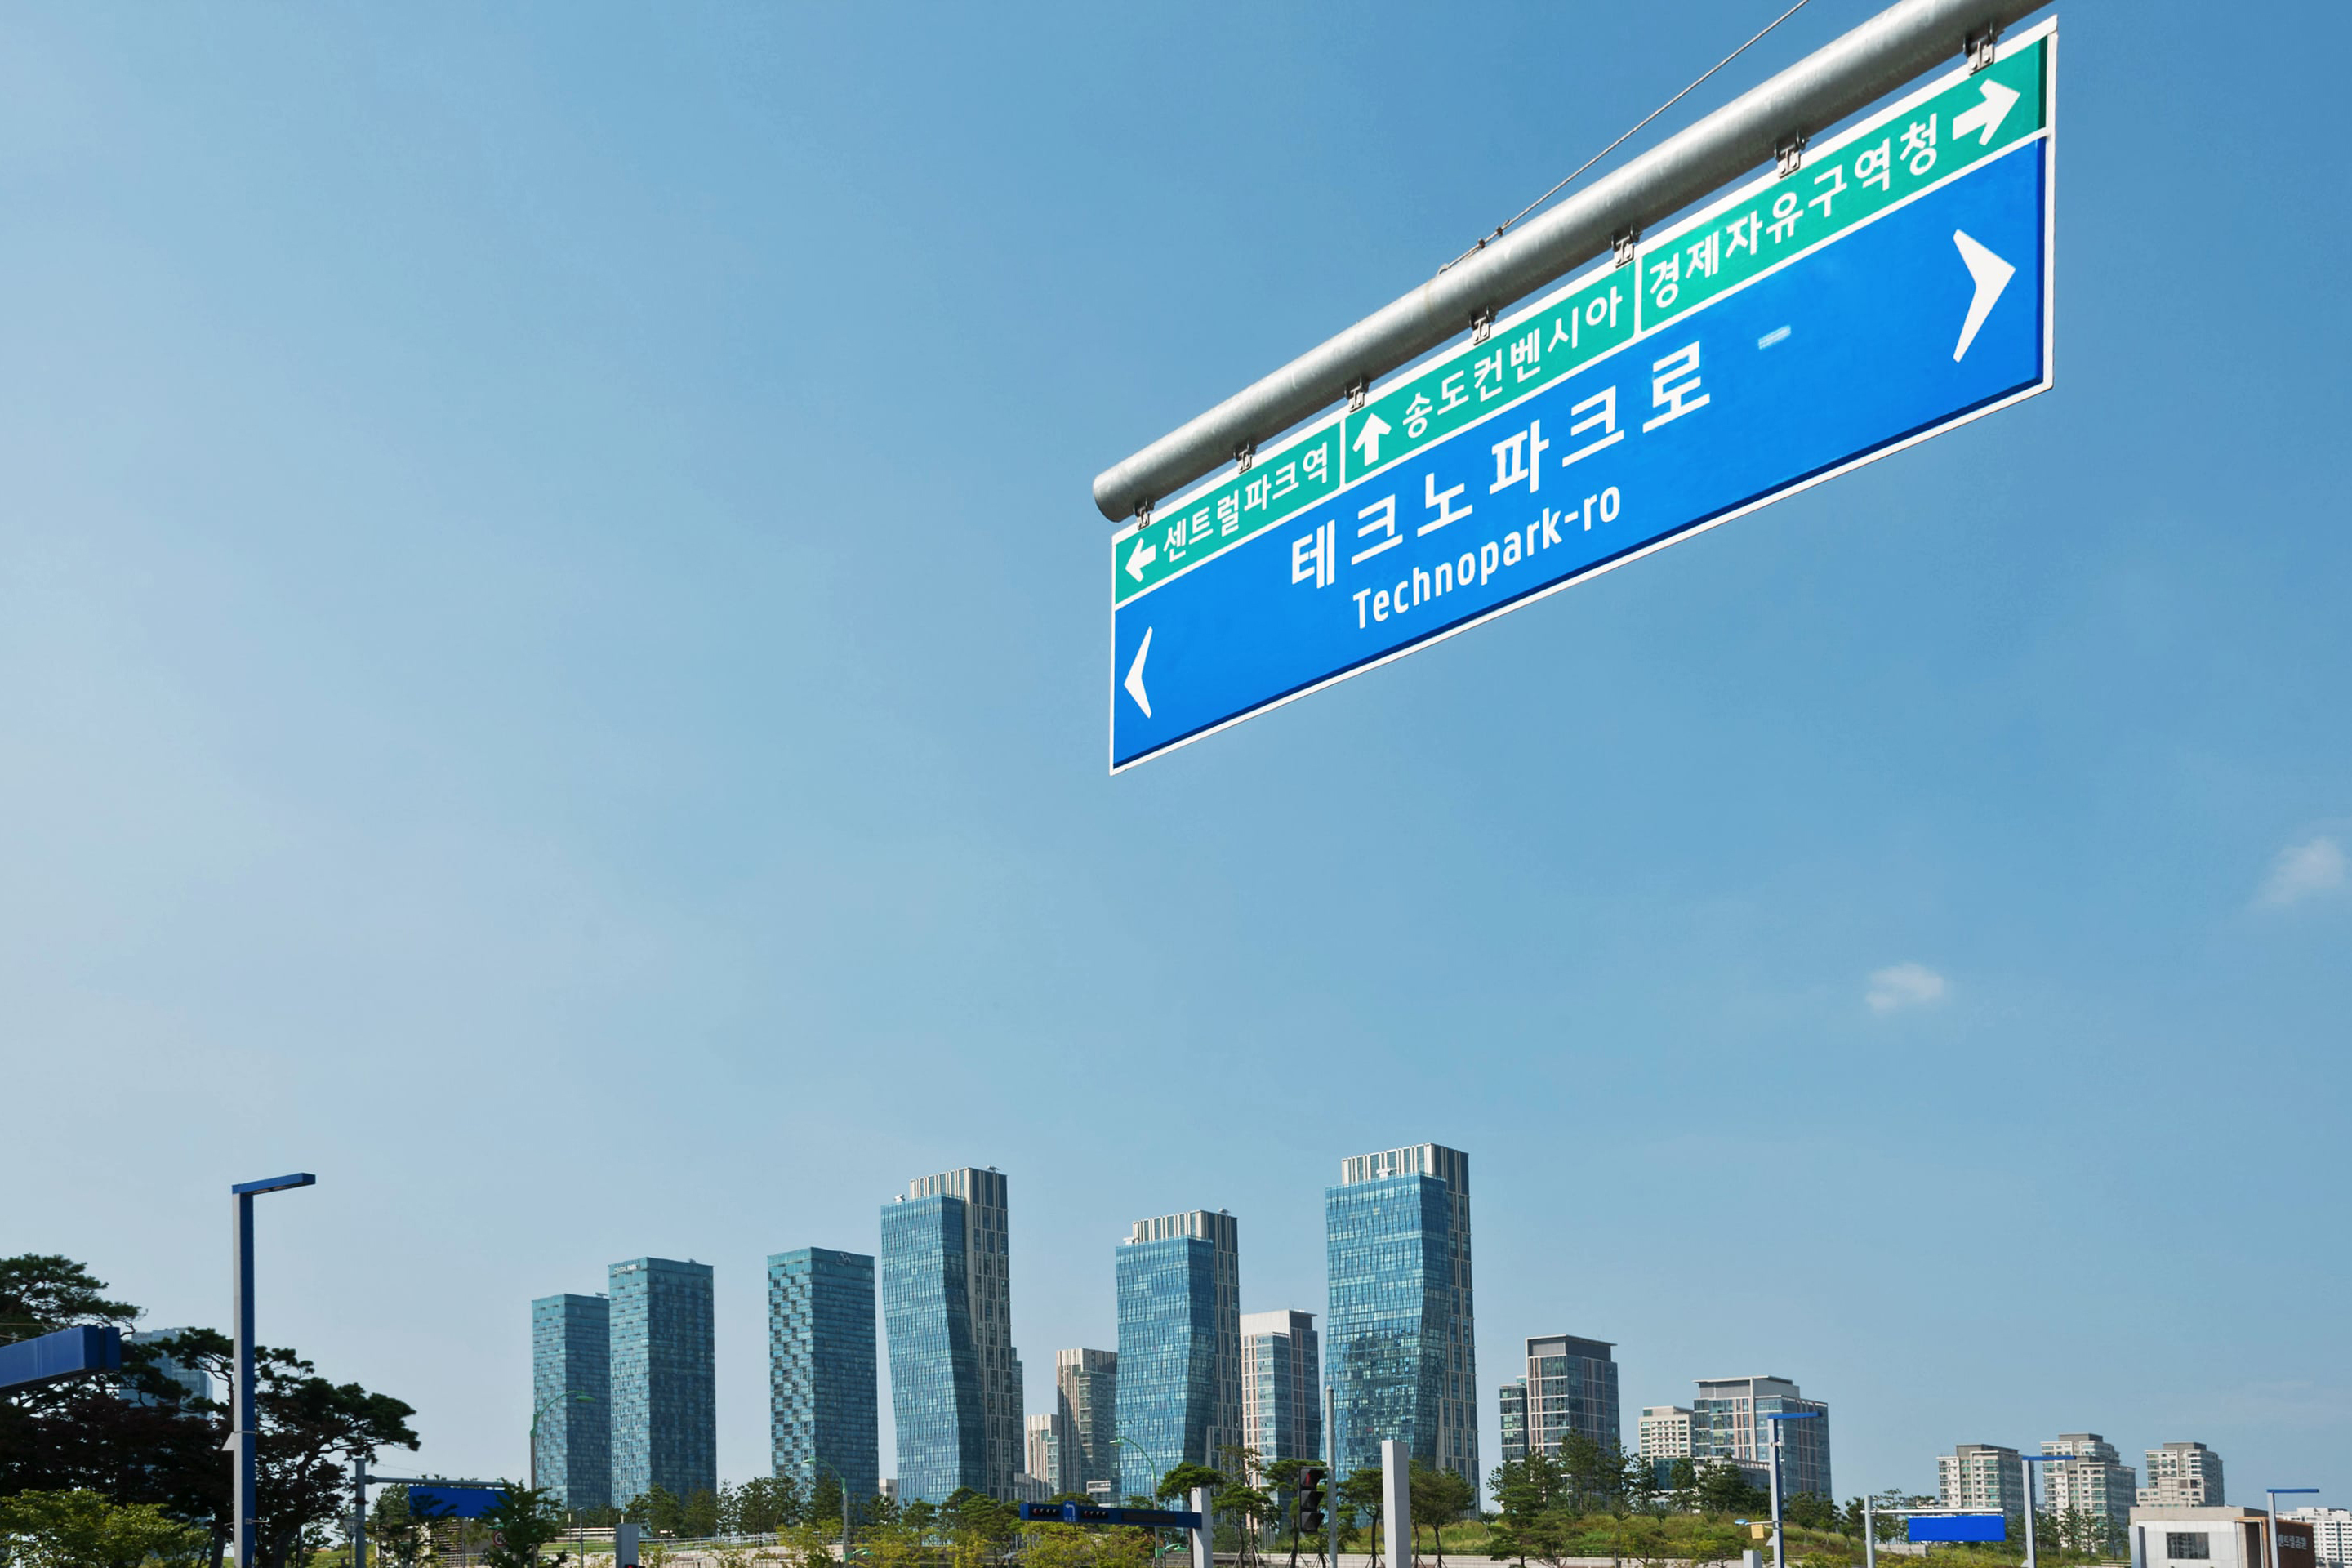 studio dumbar design South Korean road signage in use